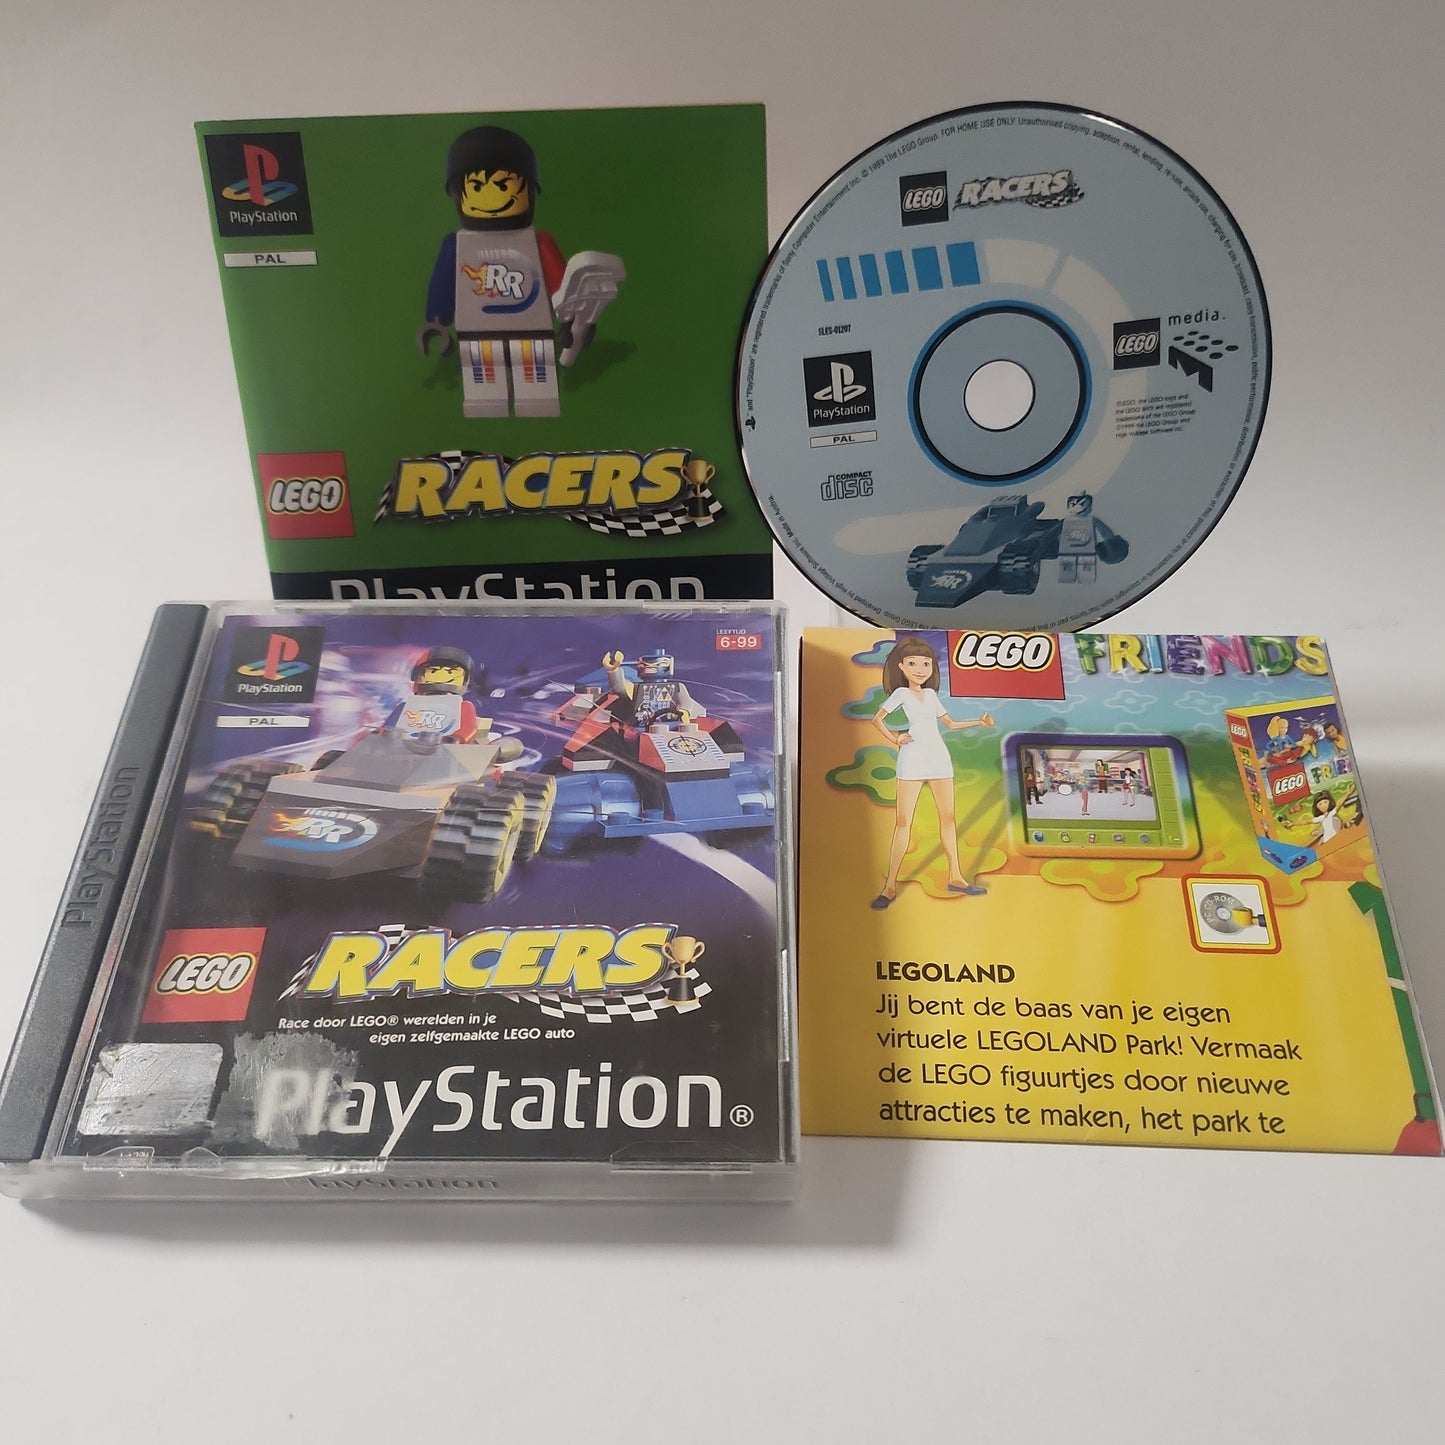 LEGO Racers Playstation 1